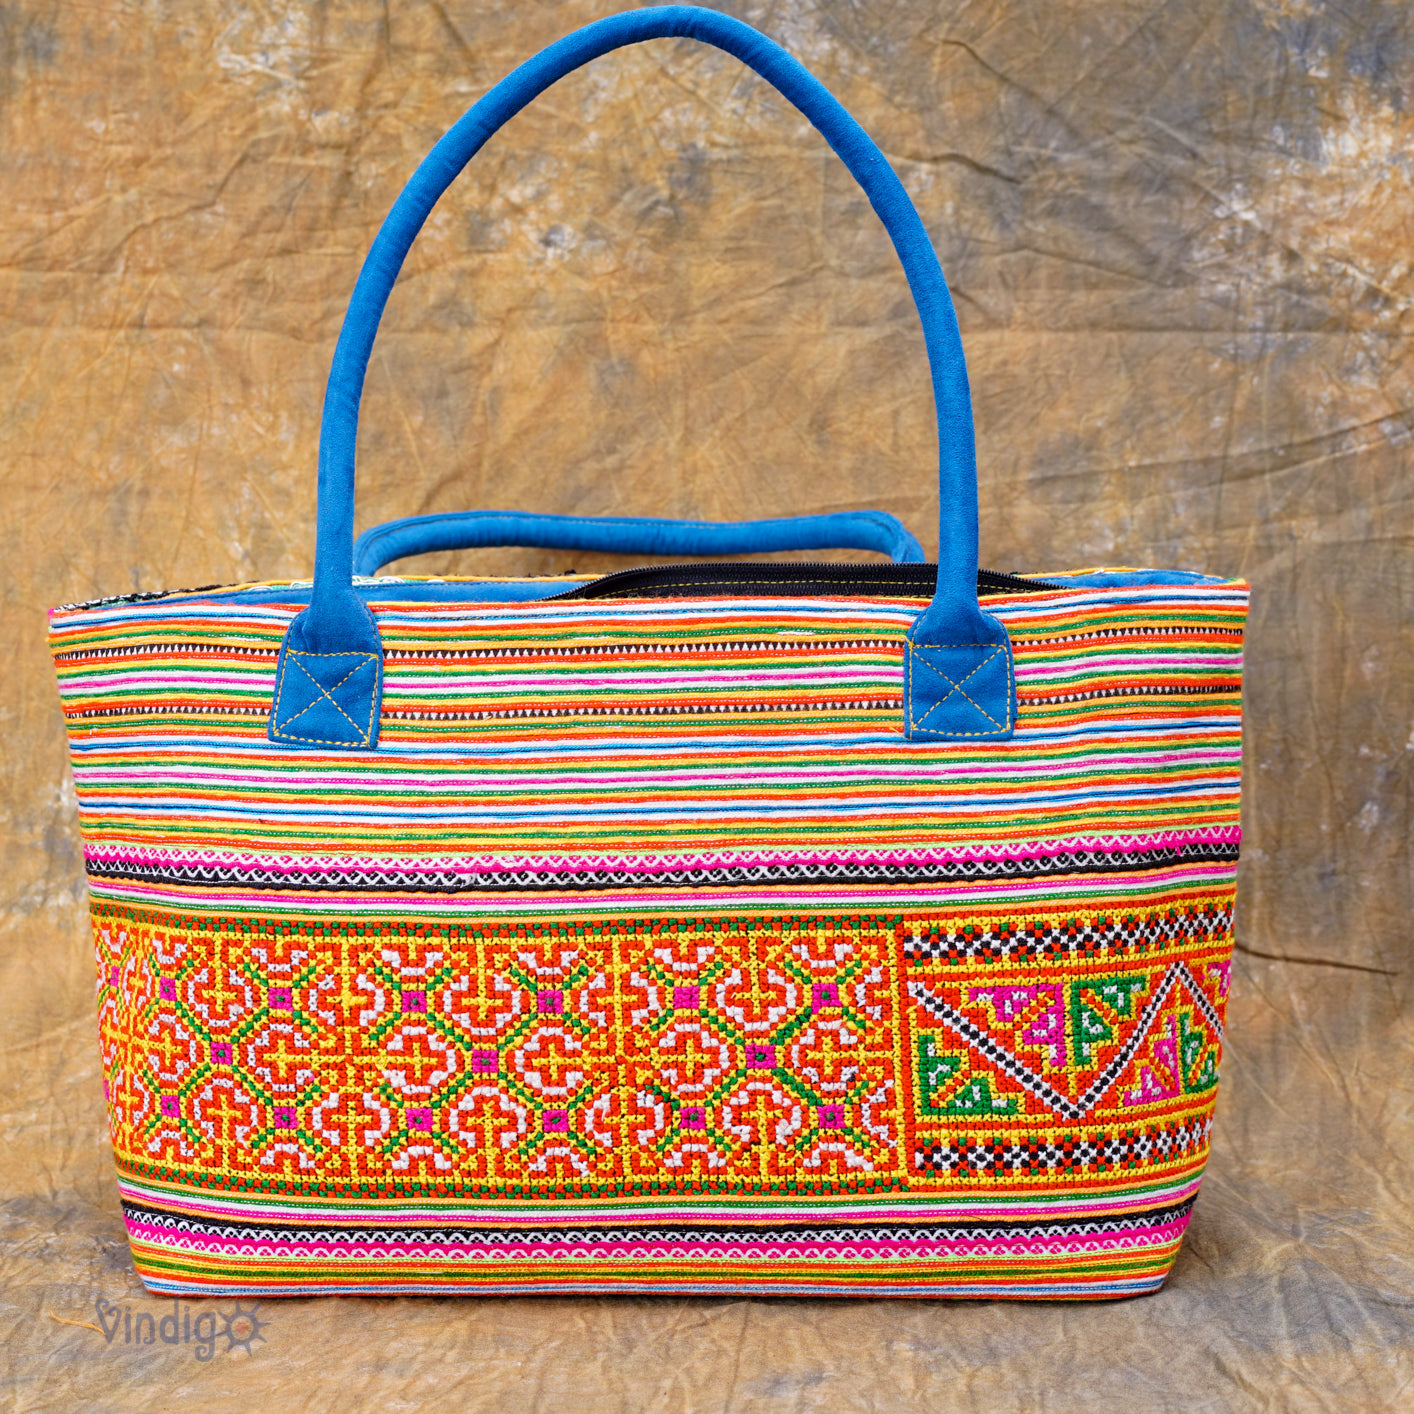 Bohemian Hmong Bag - Blue Bird Embroidered Shoulder Bag